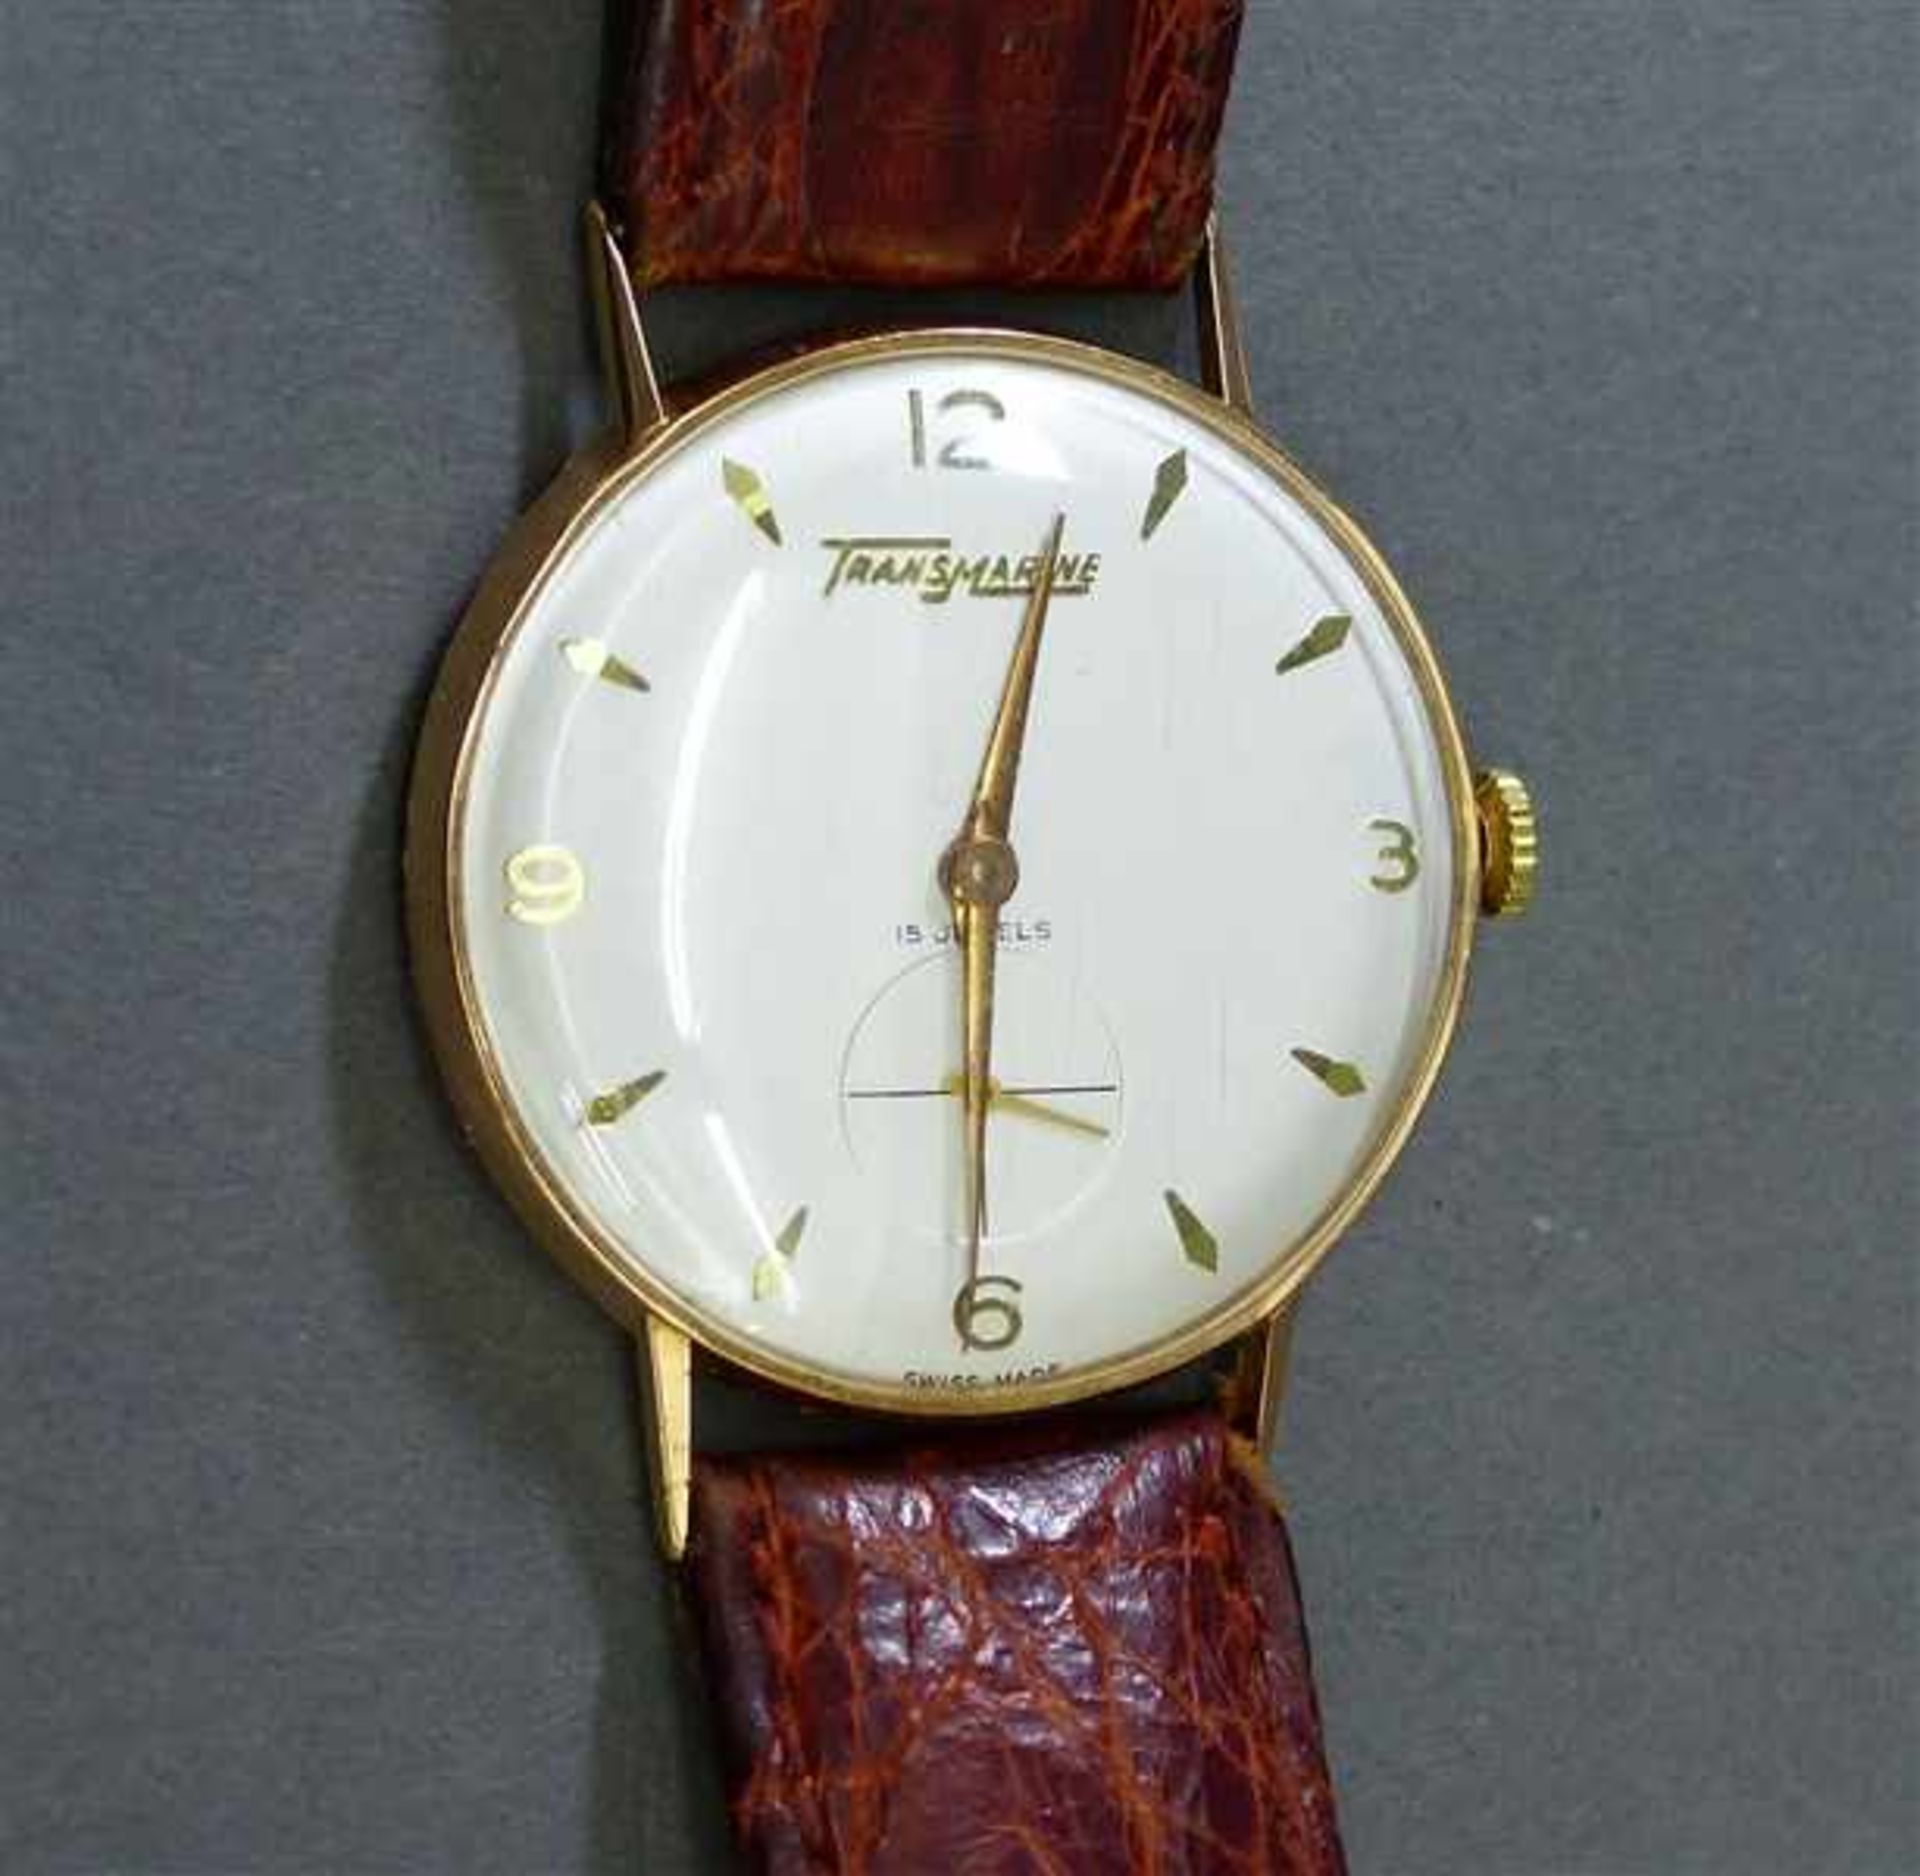 Vintage-Armbanduhr18 kt. Rotgold, 70er Jahre, "Trans Marine", Tramelan Swiss, Handaufzug, dezentrale